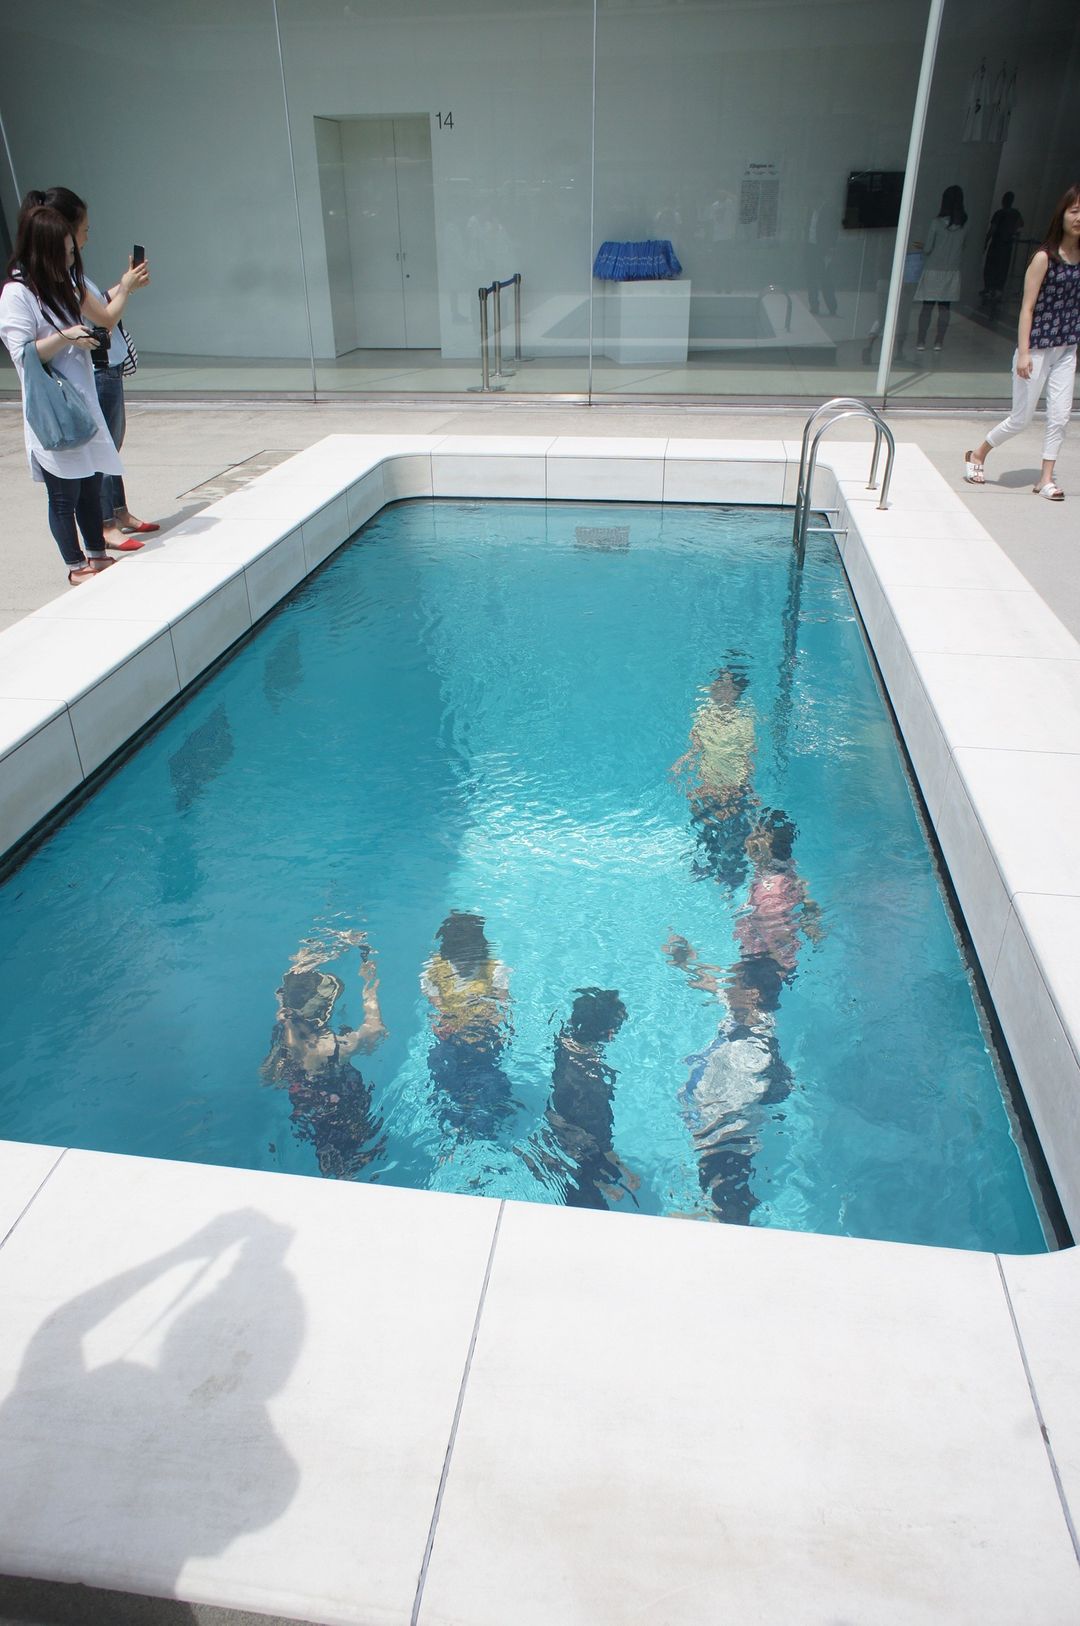 Leandro Erlich- The Swimming Pool 2004的作品，被永久收藏在此。參觀這裡是免費的。